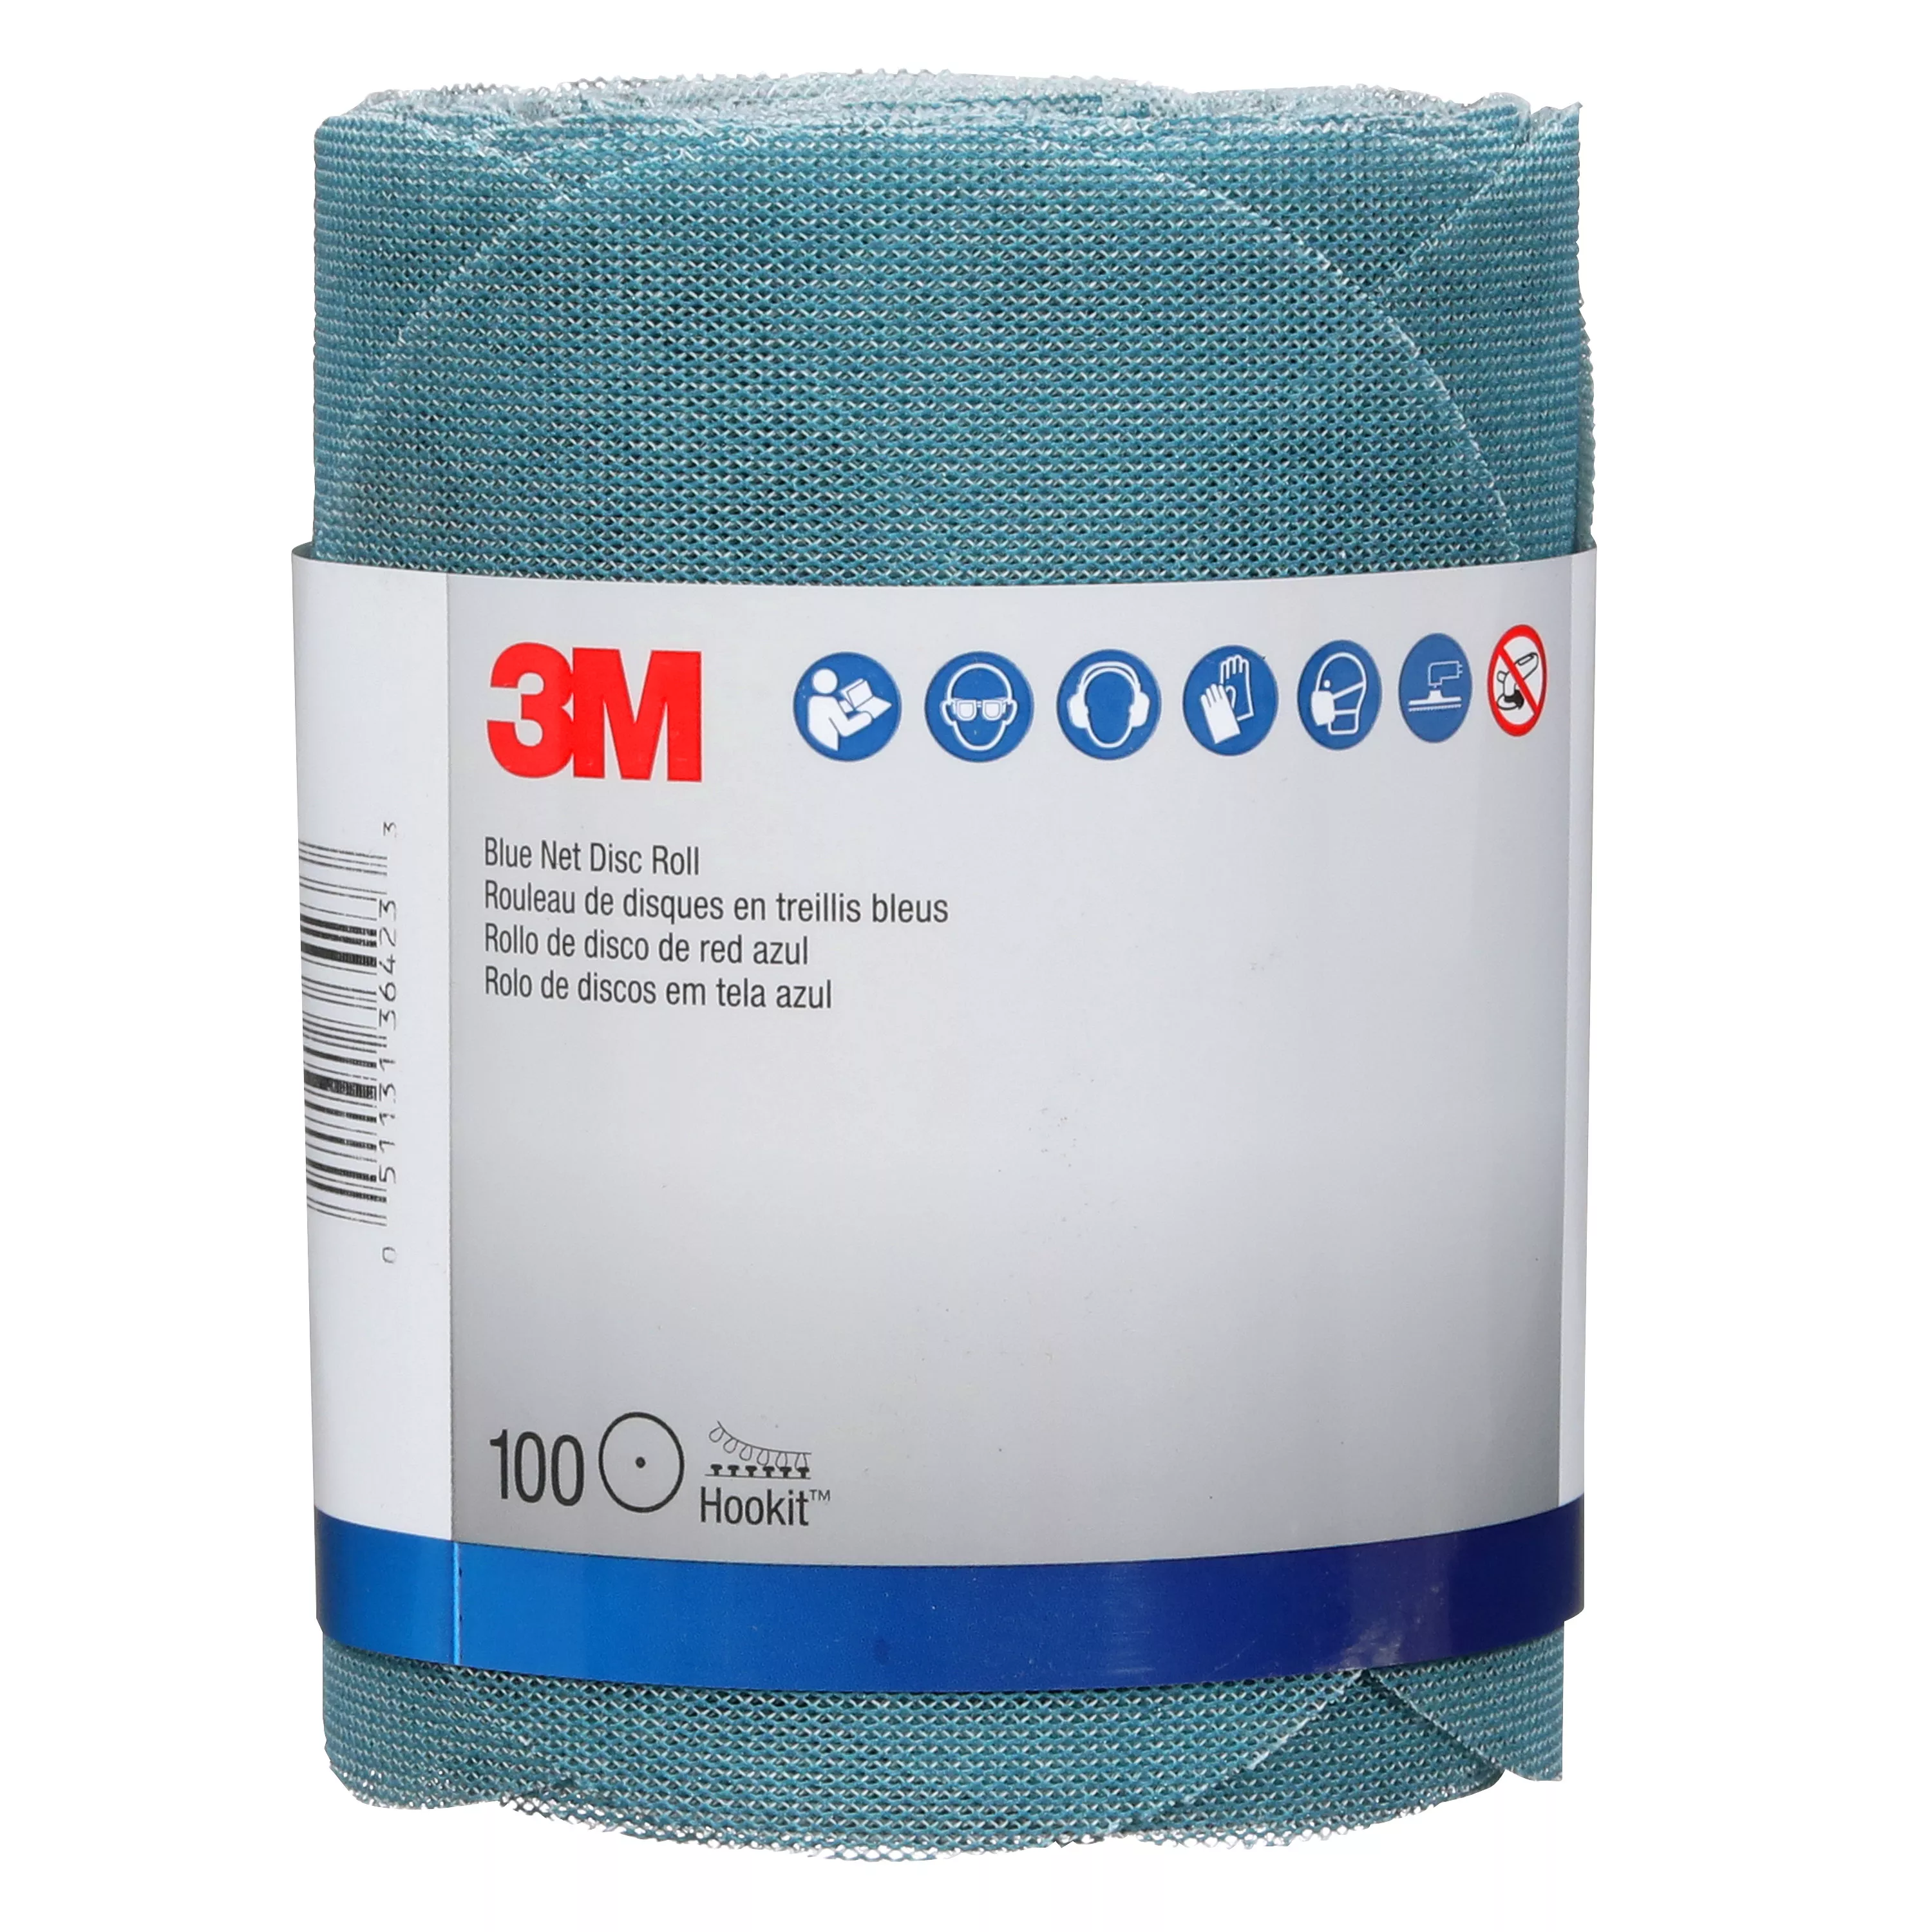 SKU 7100254374 | 3M™ Blue Net Disc Roll 36423